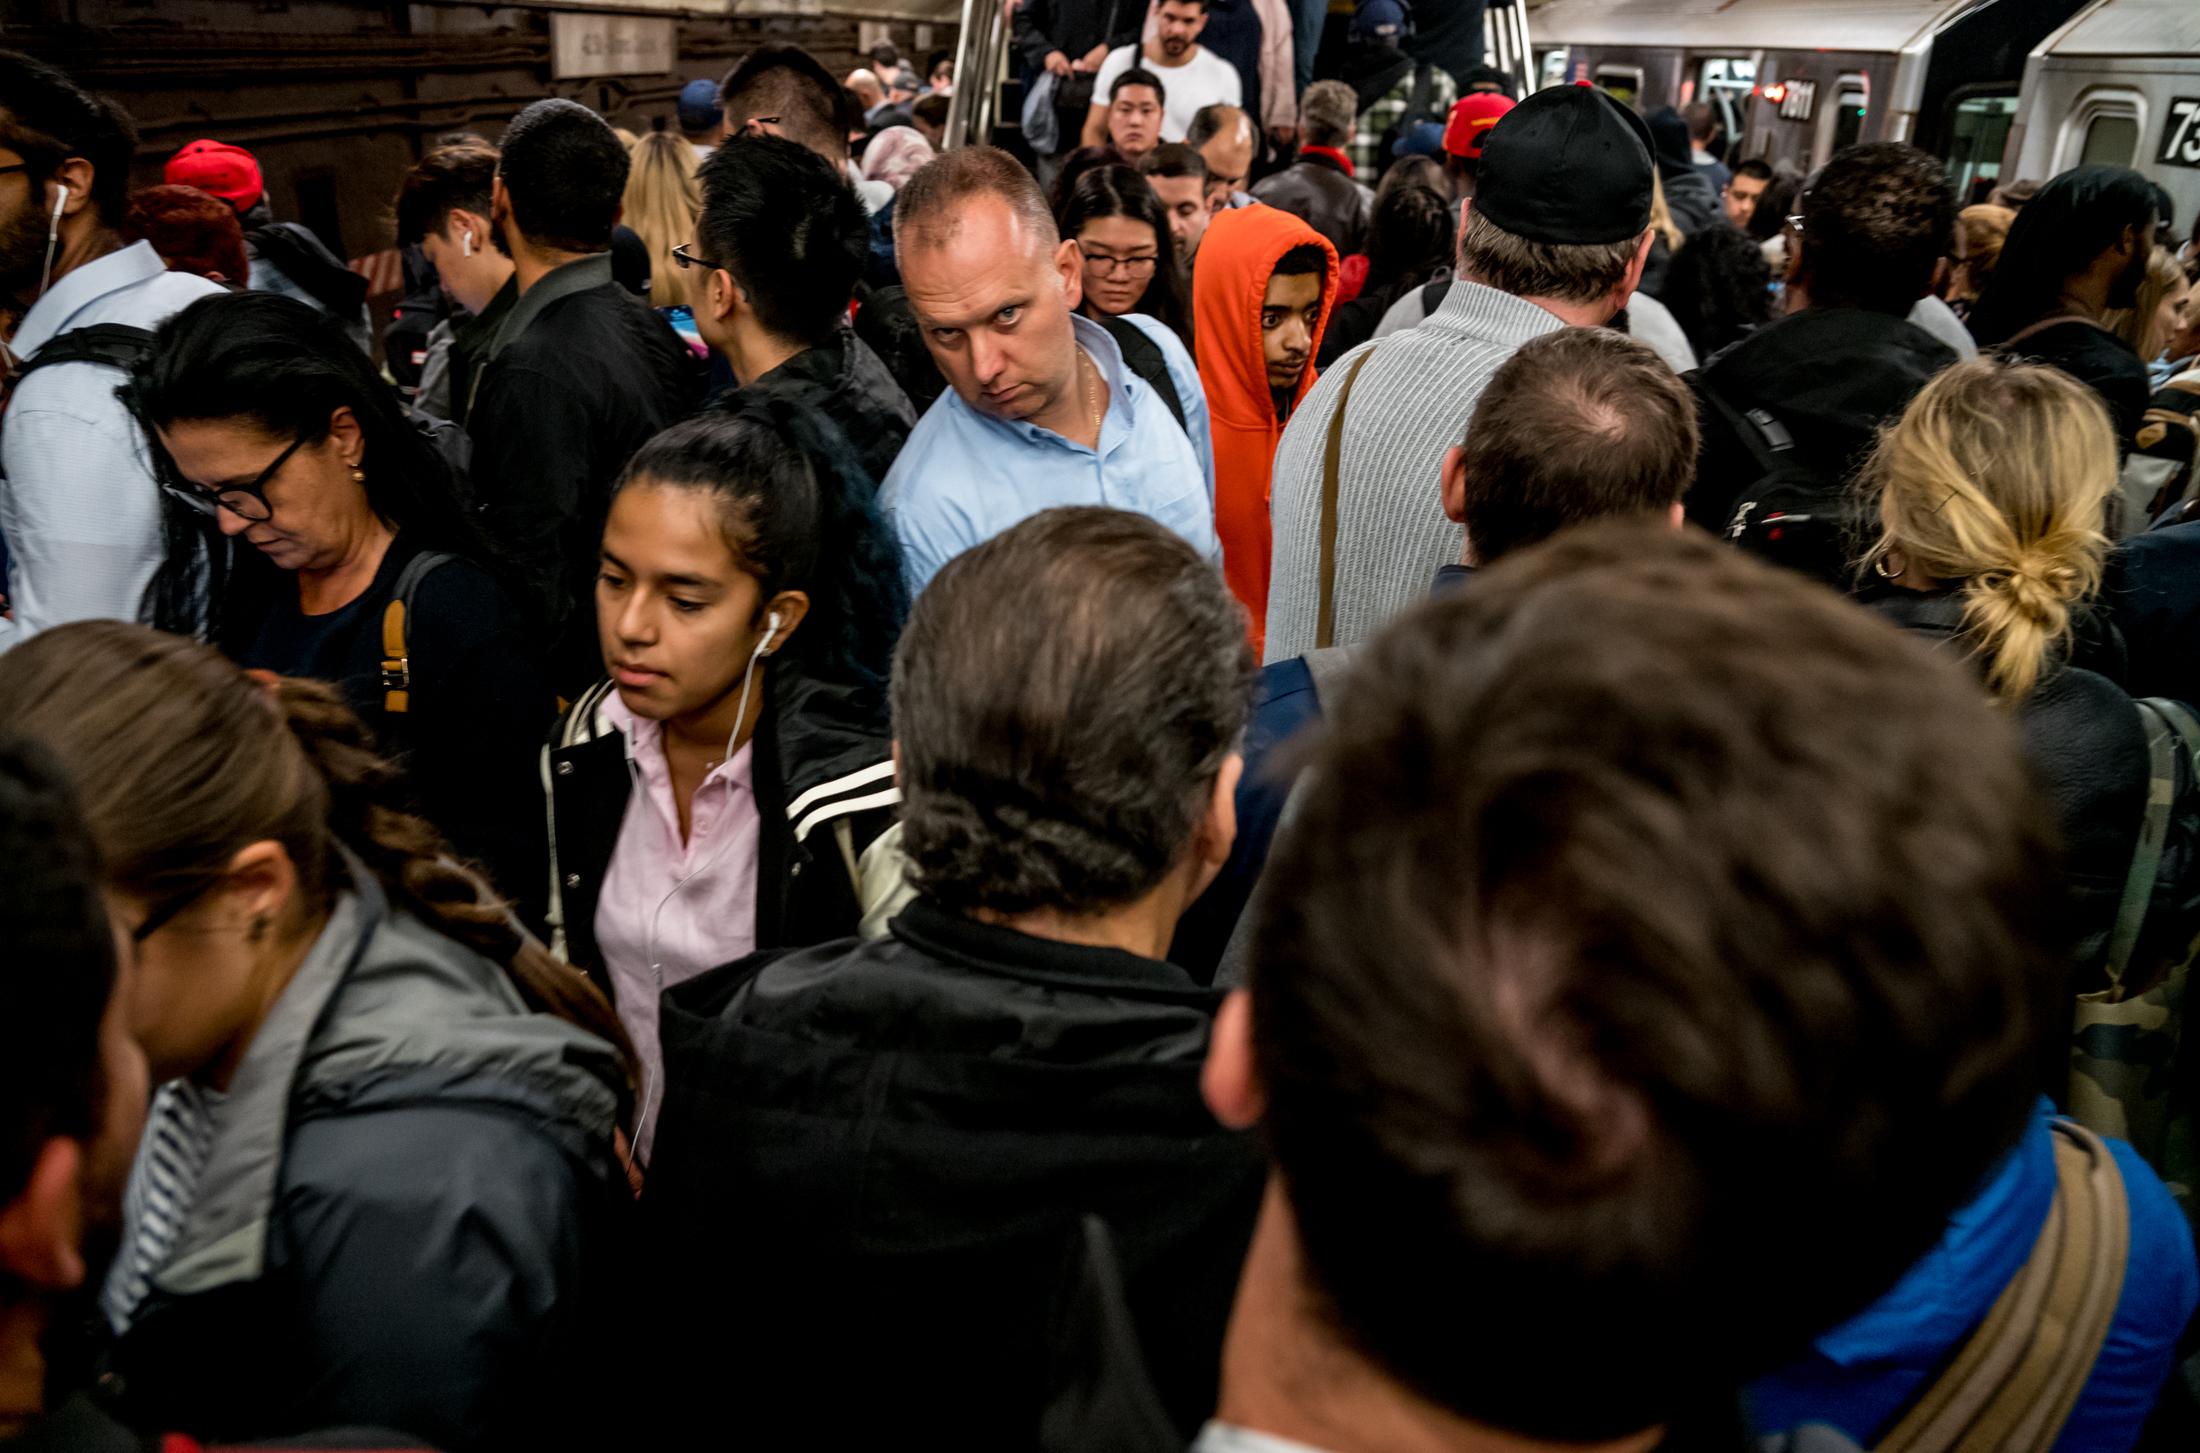  October 2019 Grand Central Station, Manhattan 